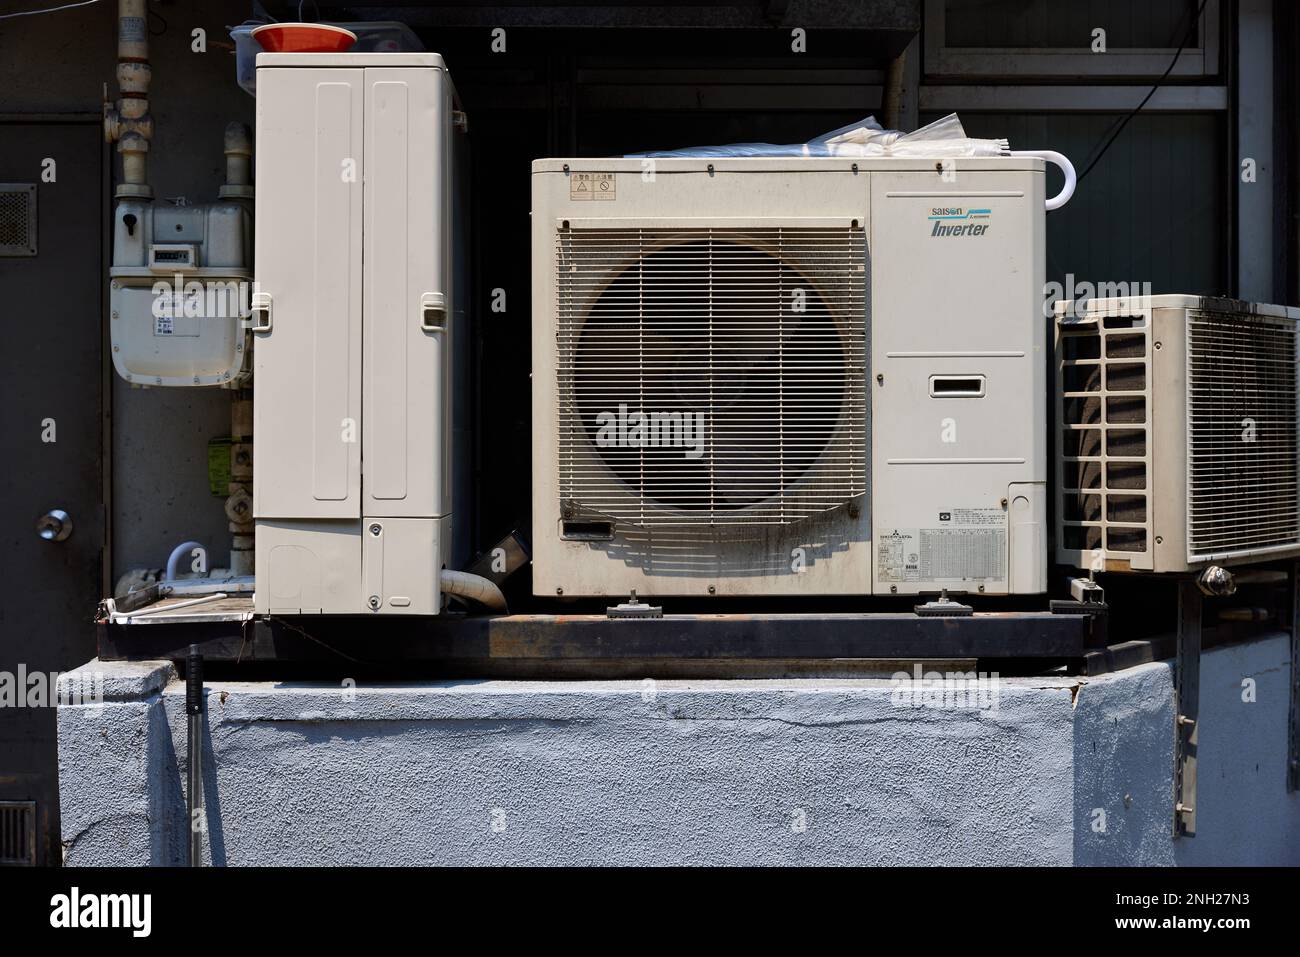 Mitsubishi Saison Inverter, air conditioning unit; Japan Stock Photo